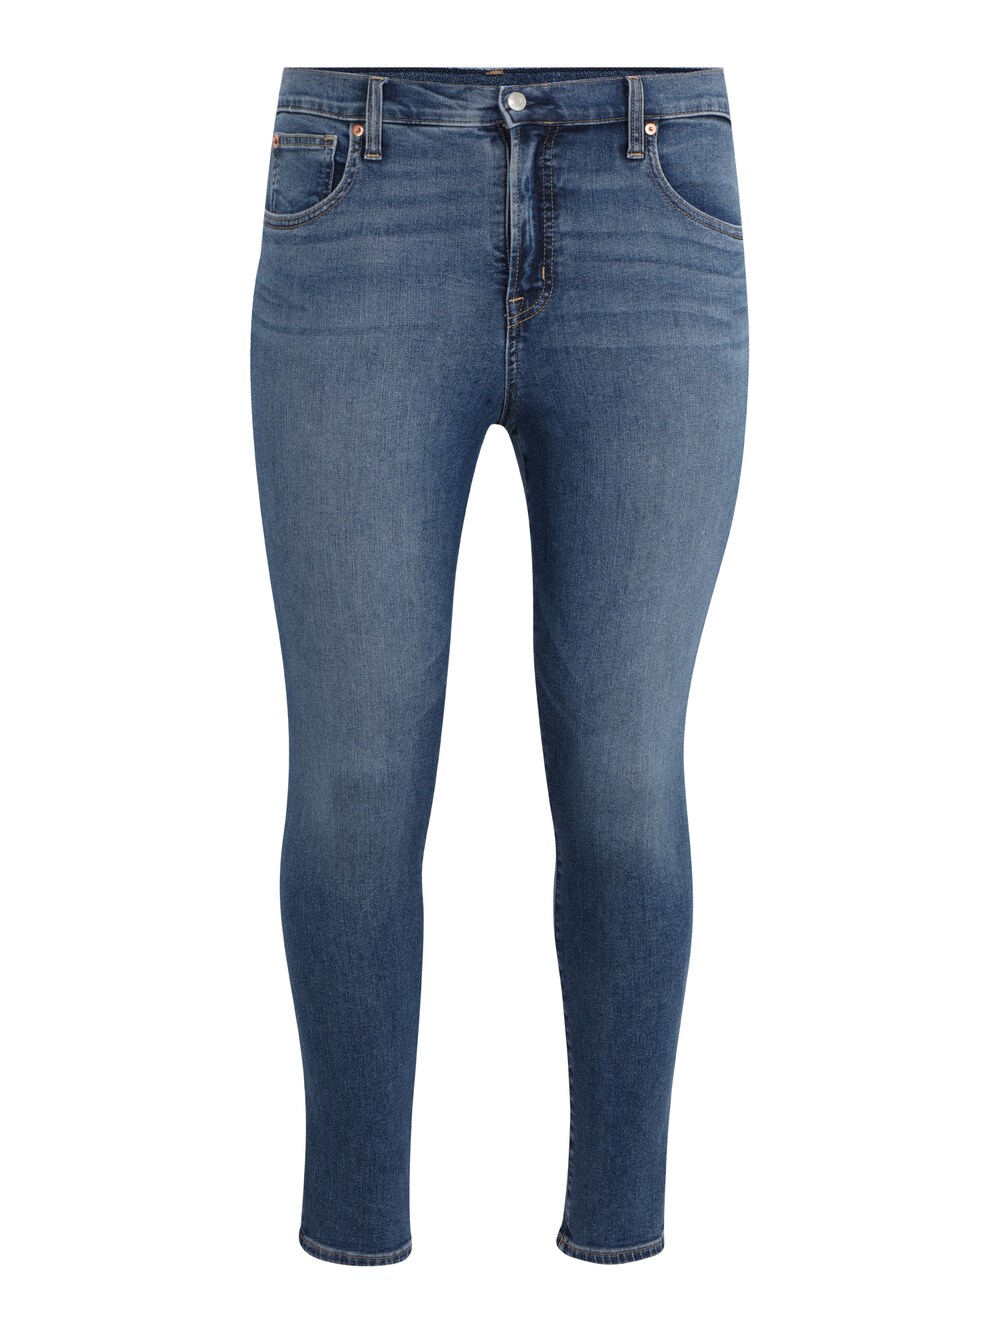 Узкие джинсы Gap Talma, синий узкие джинсы gap черный